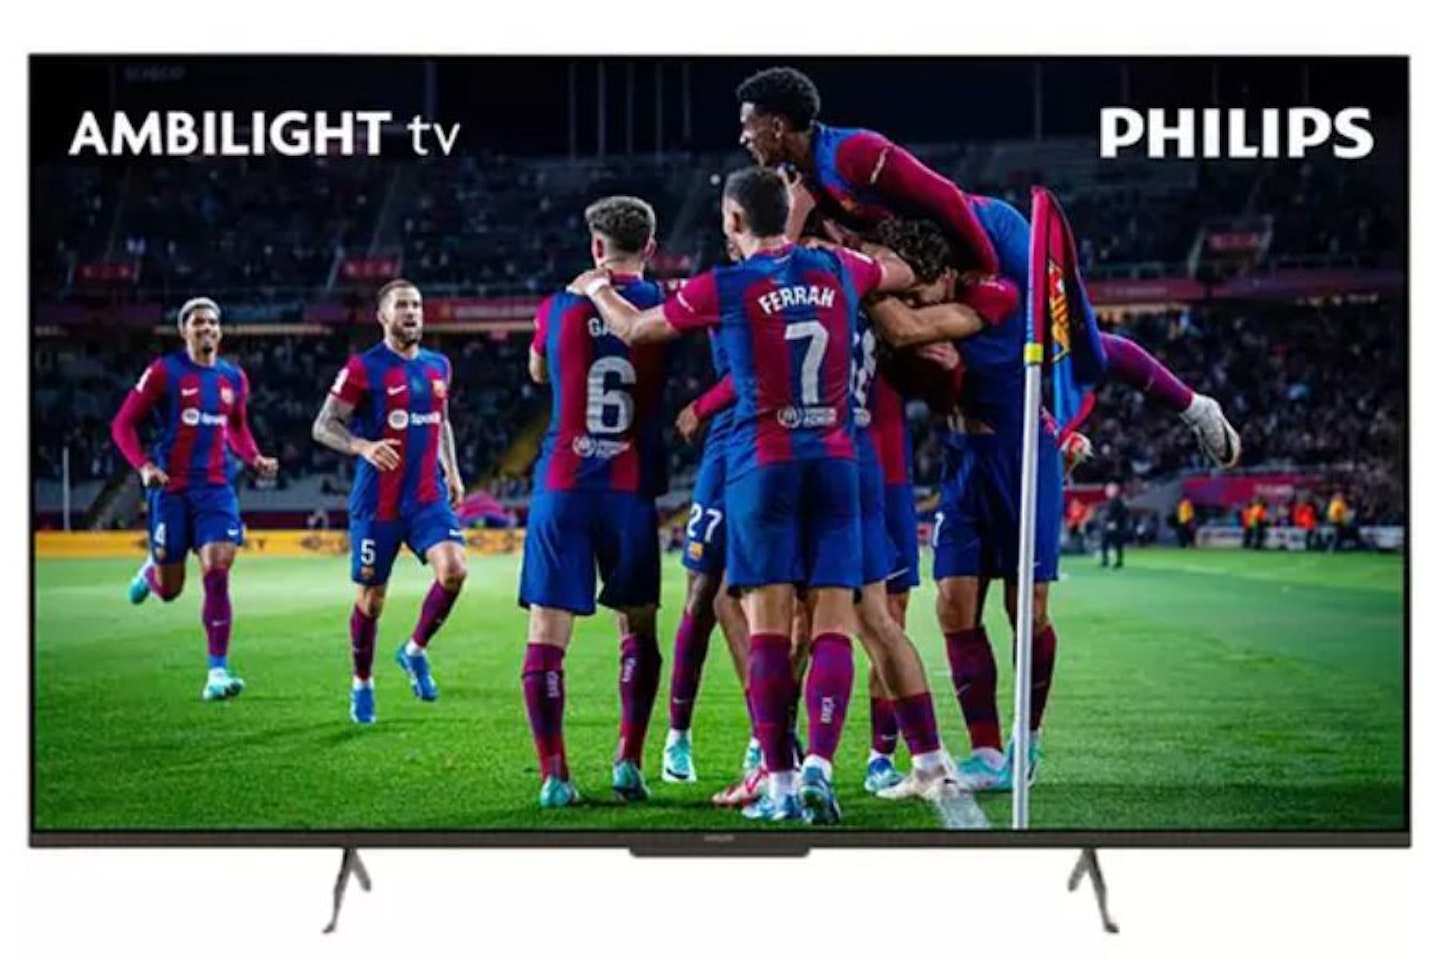 PHILIPS Ambilight 65PUS8108/12 65-inch 4K LED TV